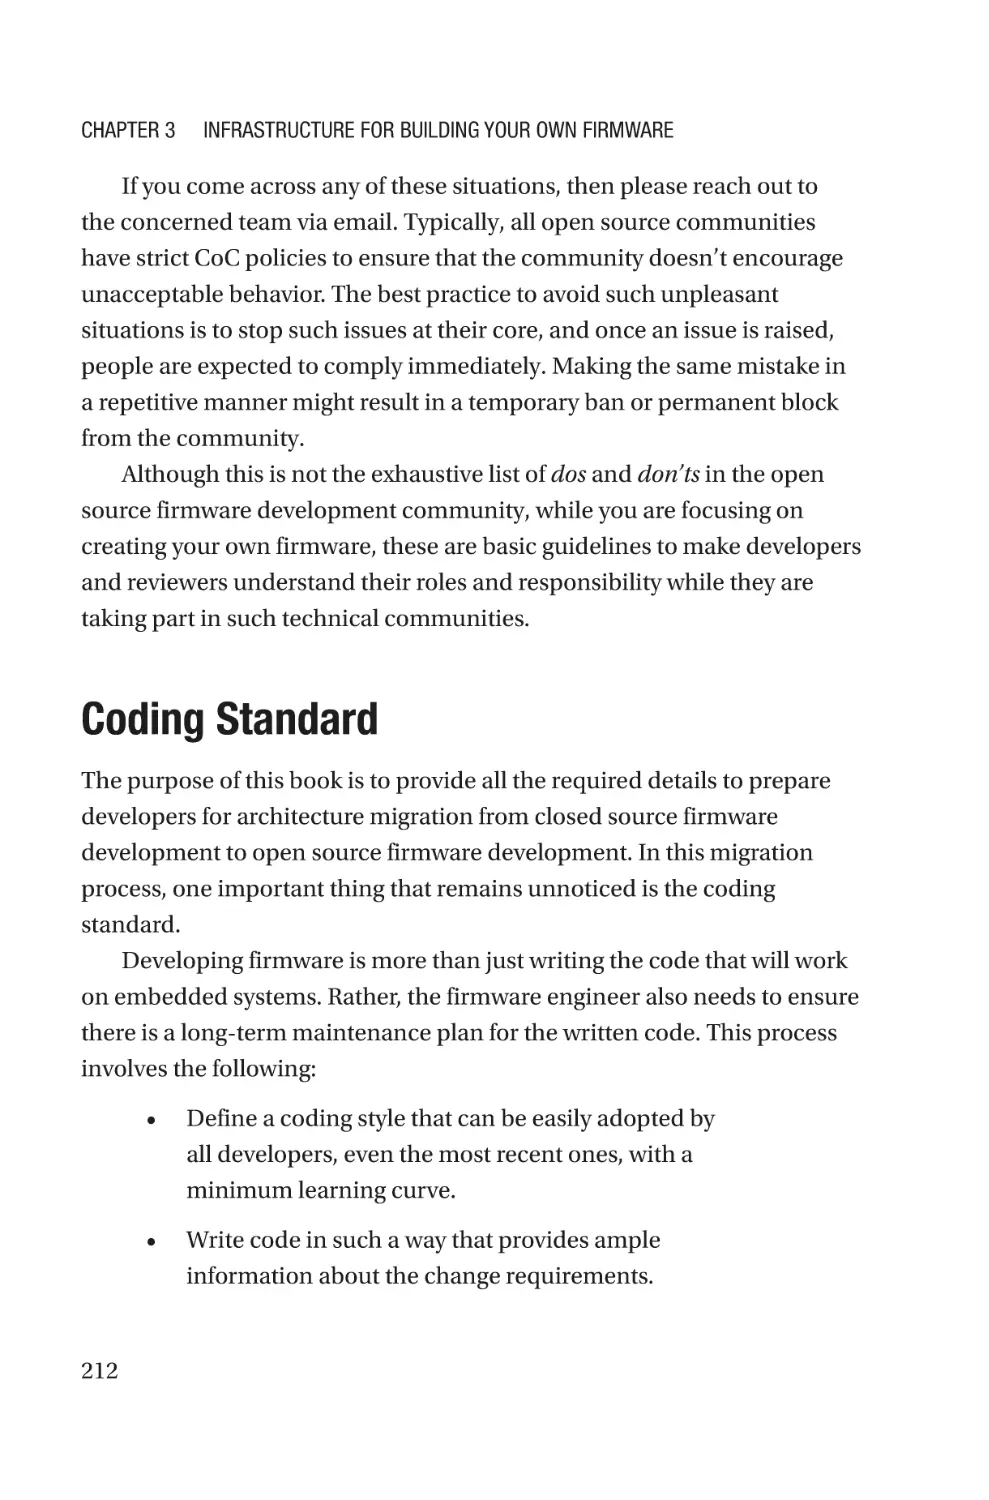 Coding Standard